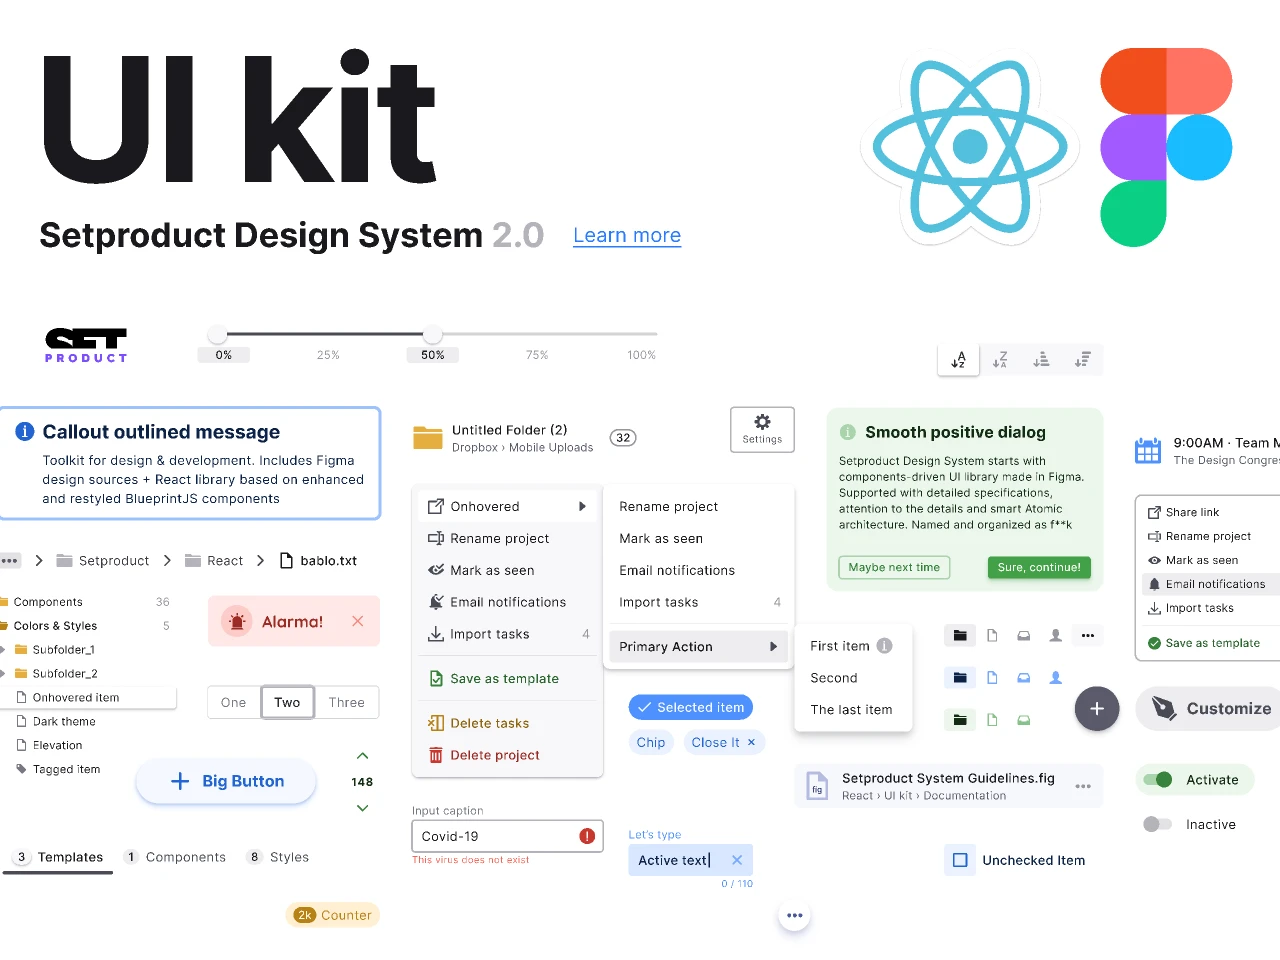 Setproduct Design System 2.0 - UI kit for Figma and Adobe XD